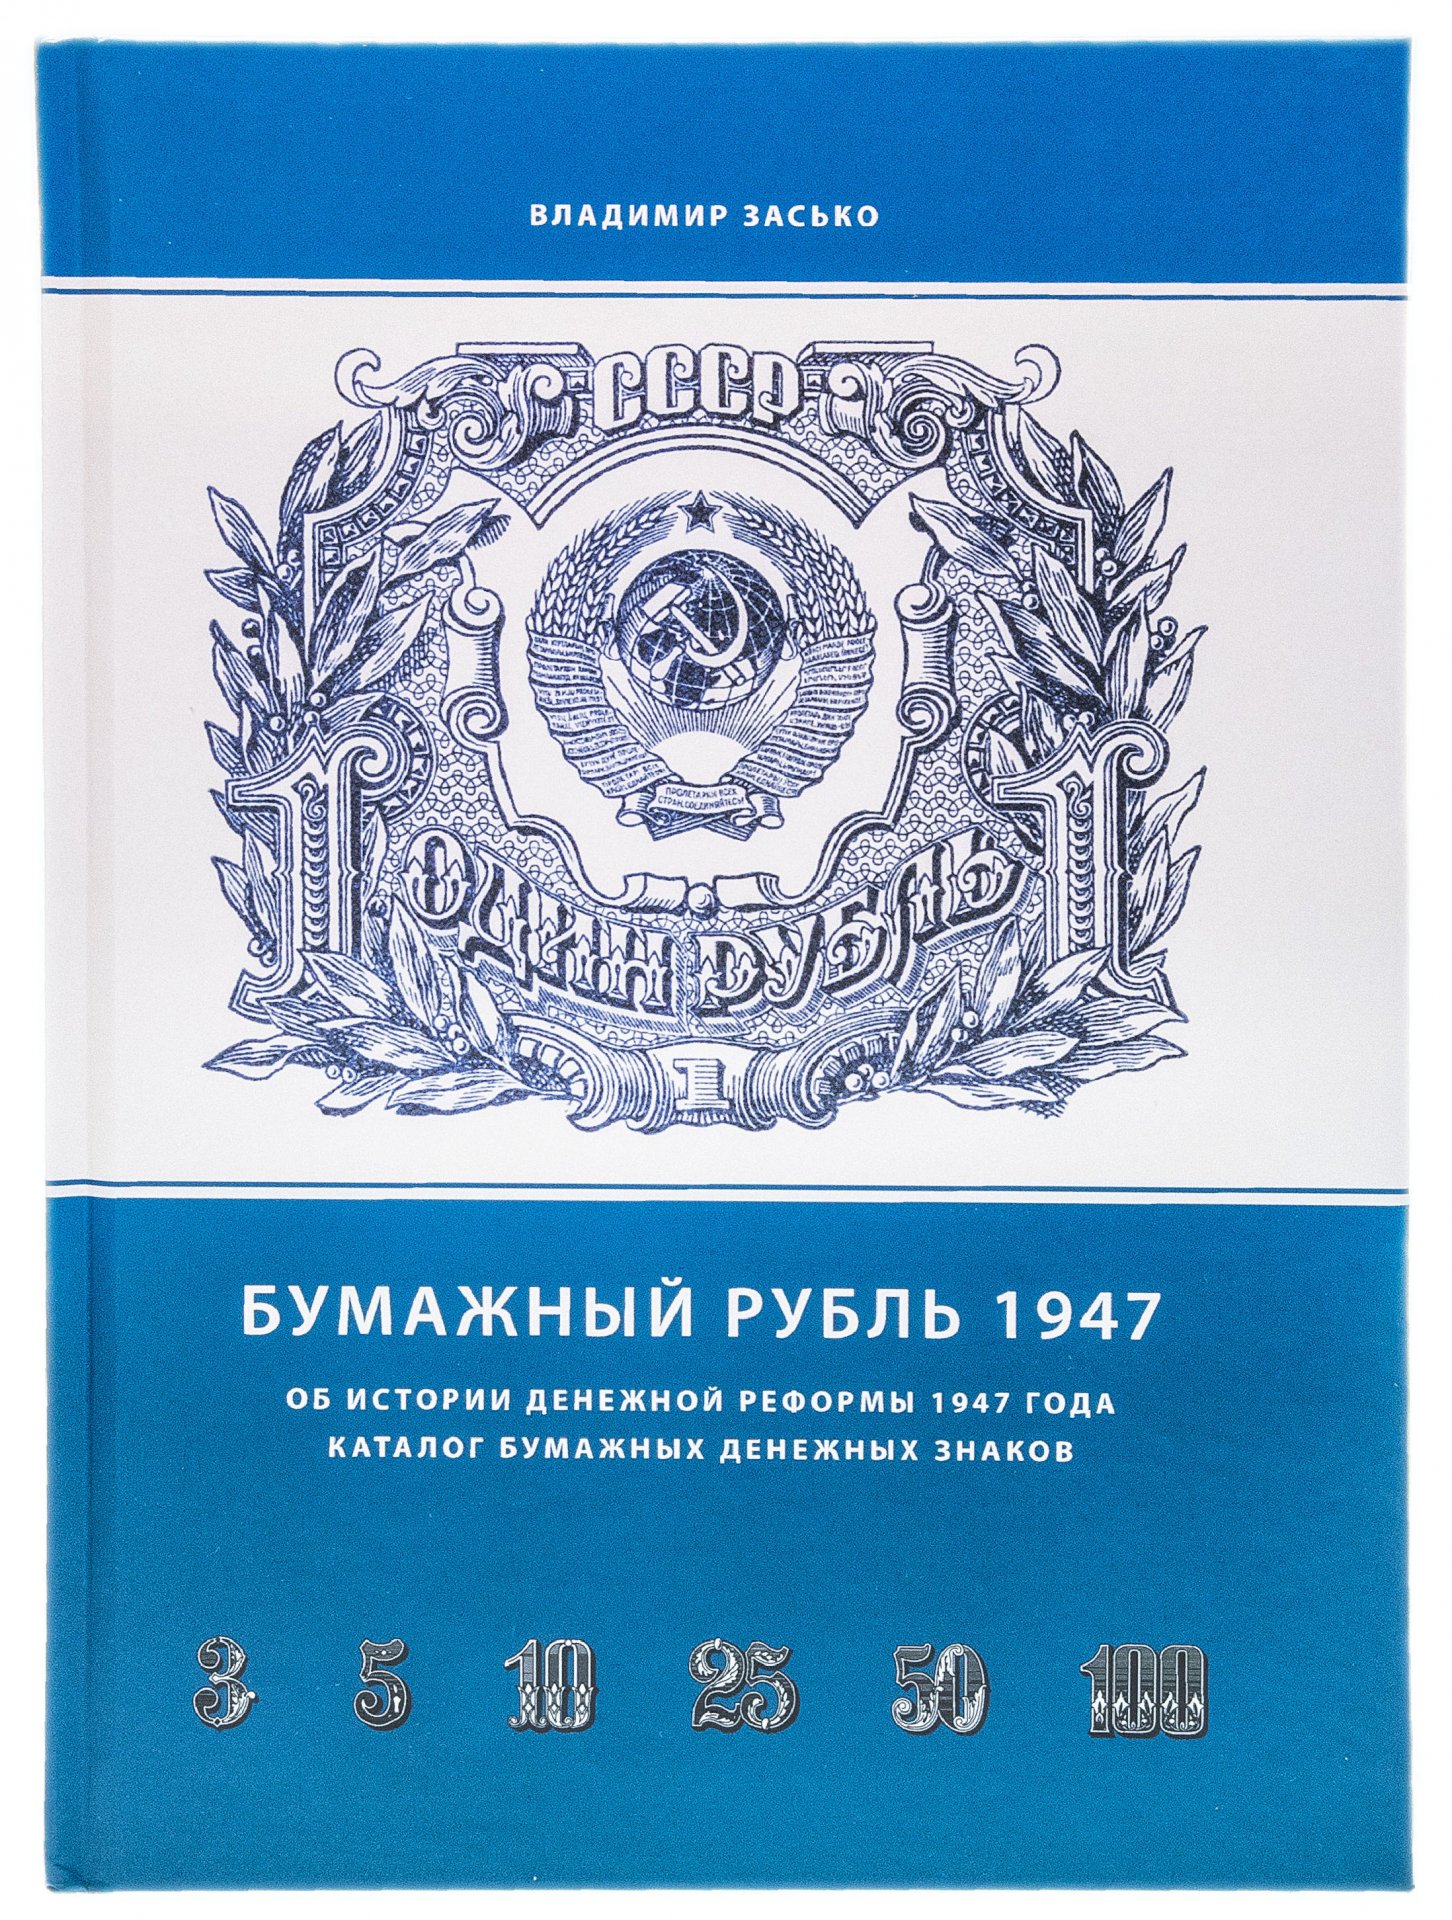 1947 год книги. Засько бумажный рубль 1947. Засько бумажный рубль 1947 pdf.